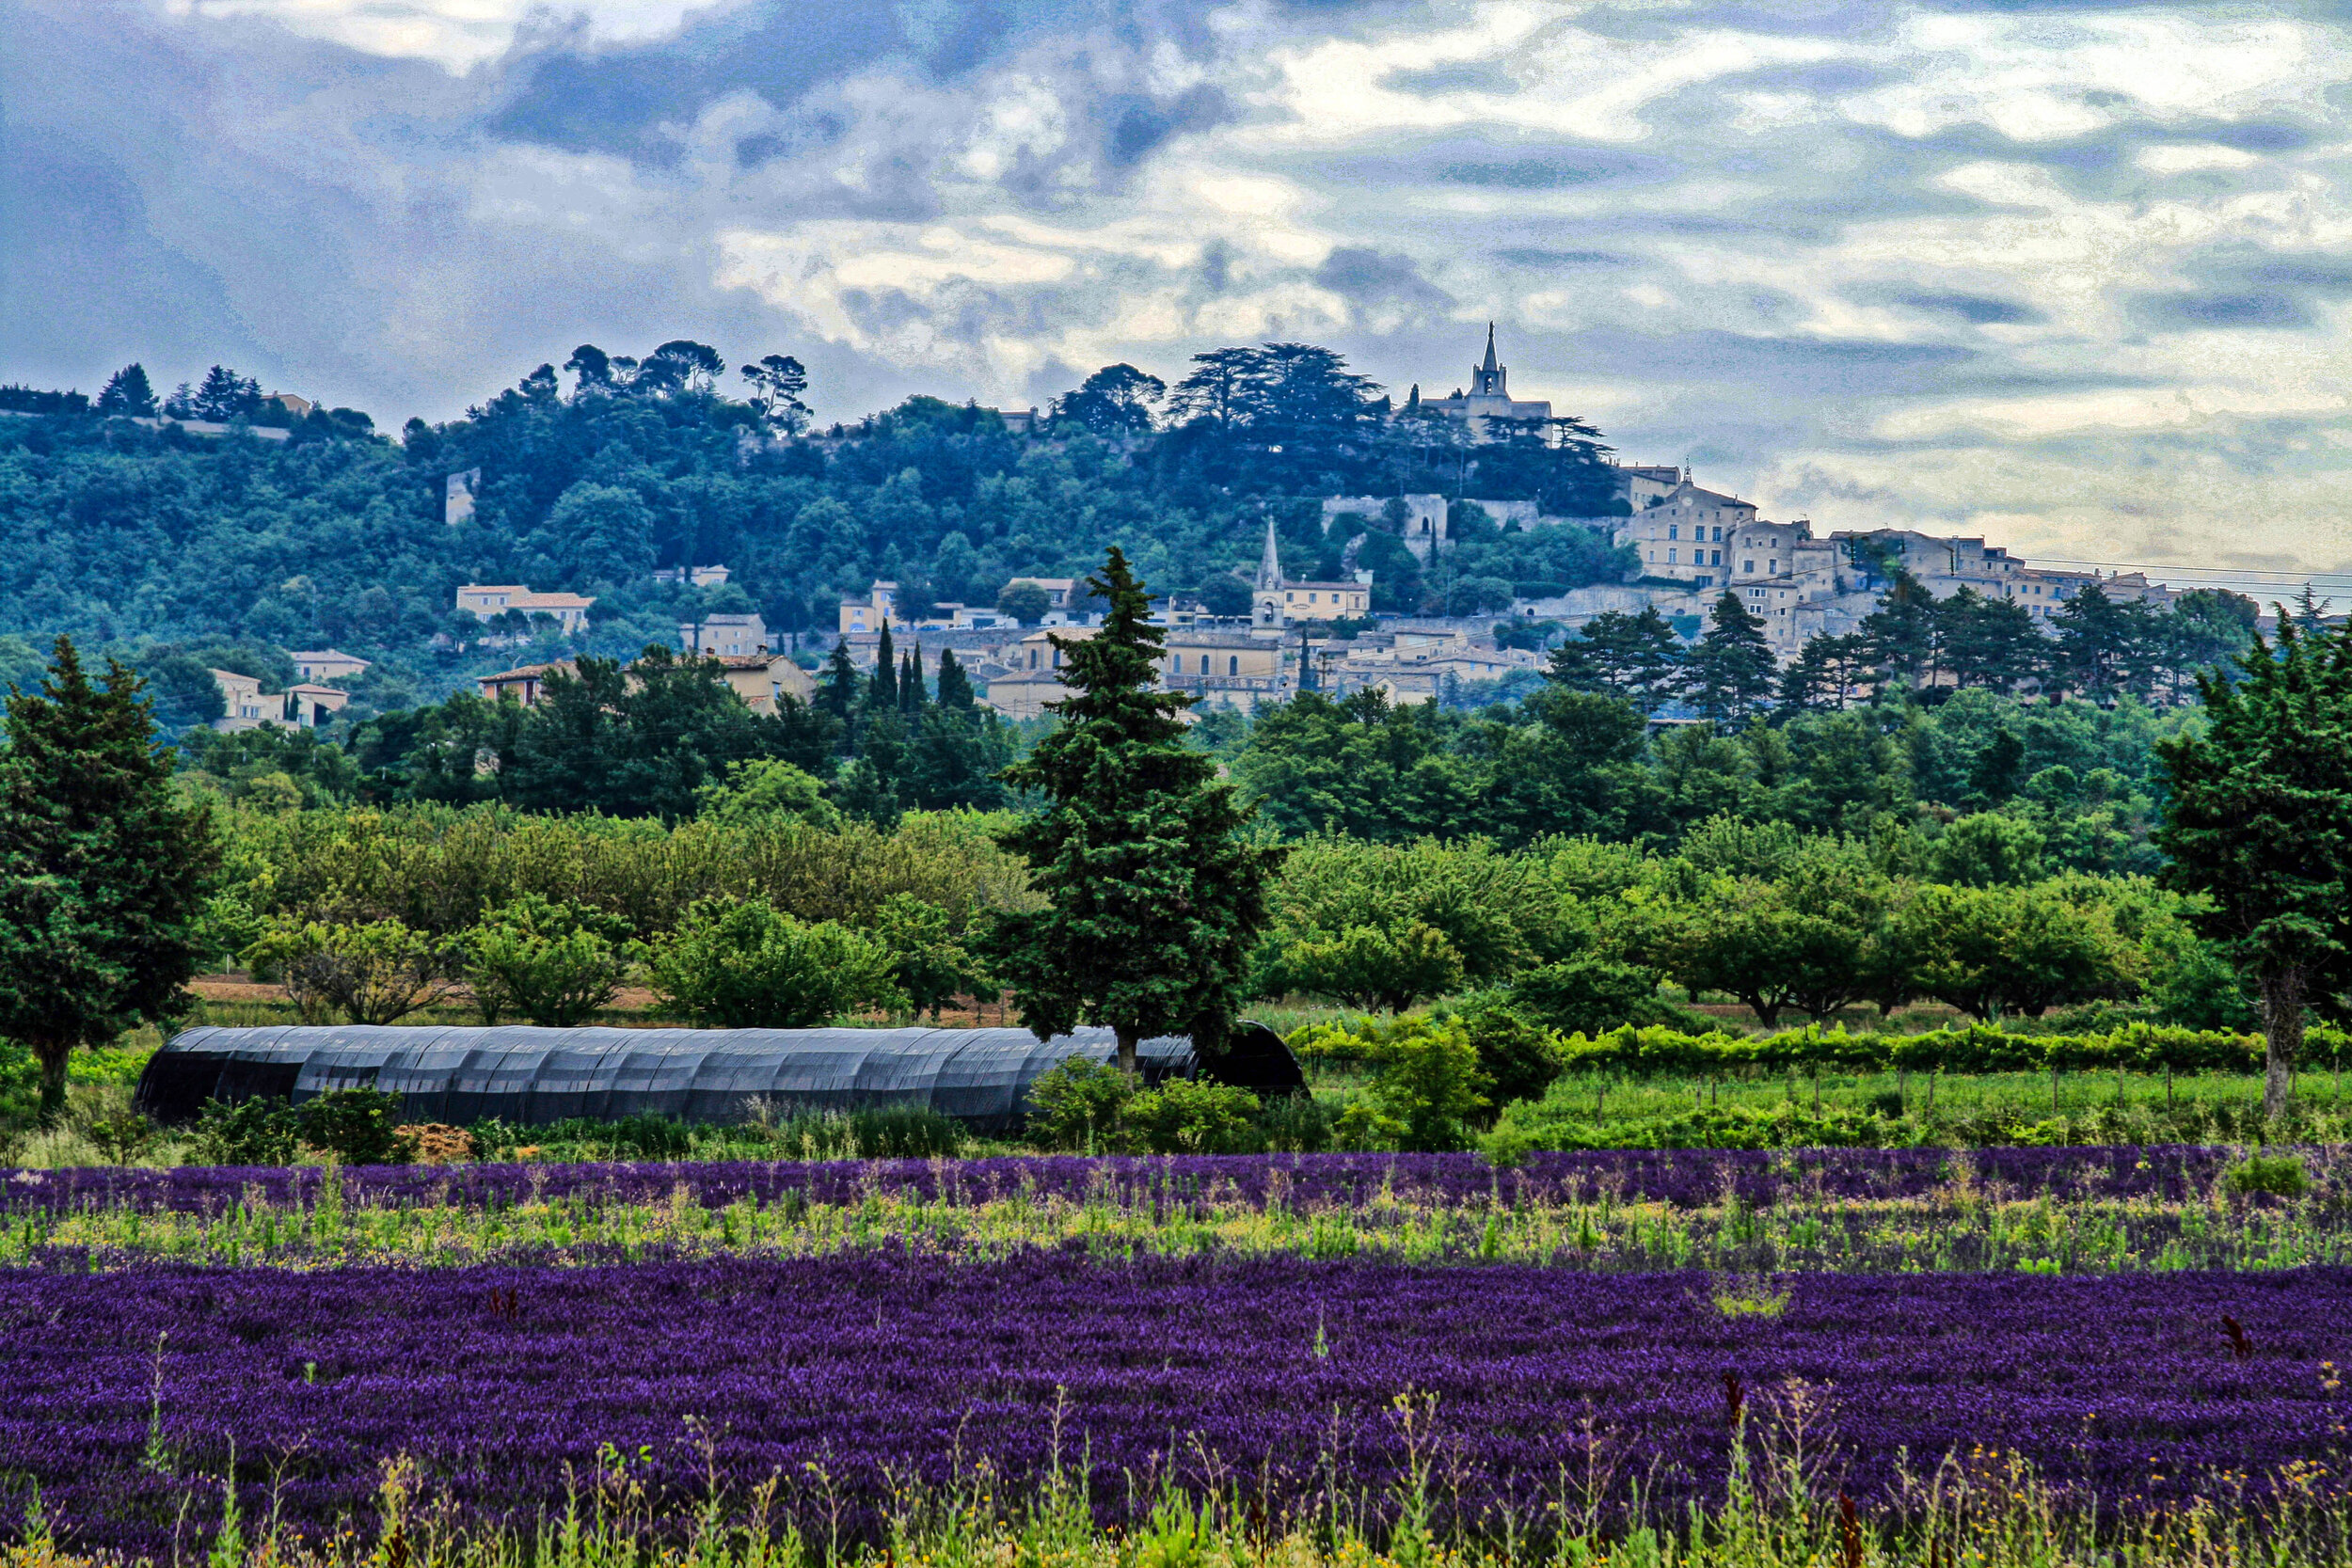  Lavender Fields, Provence, France         